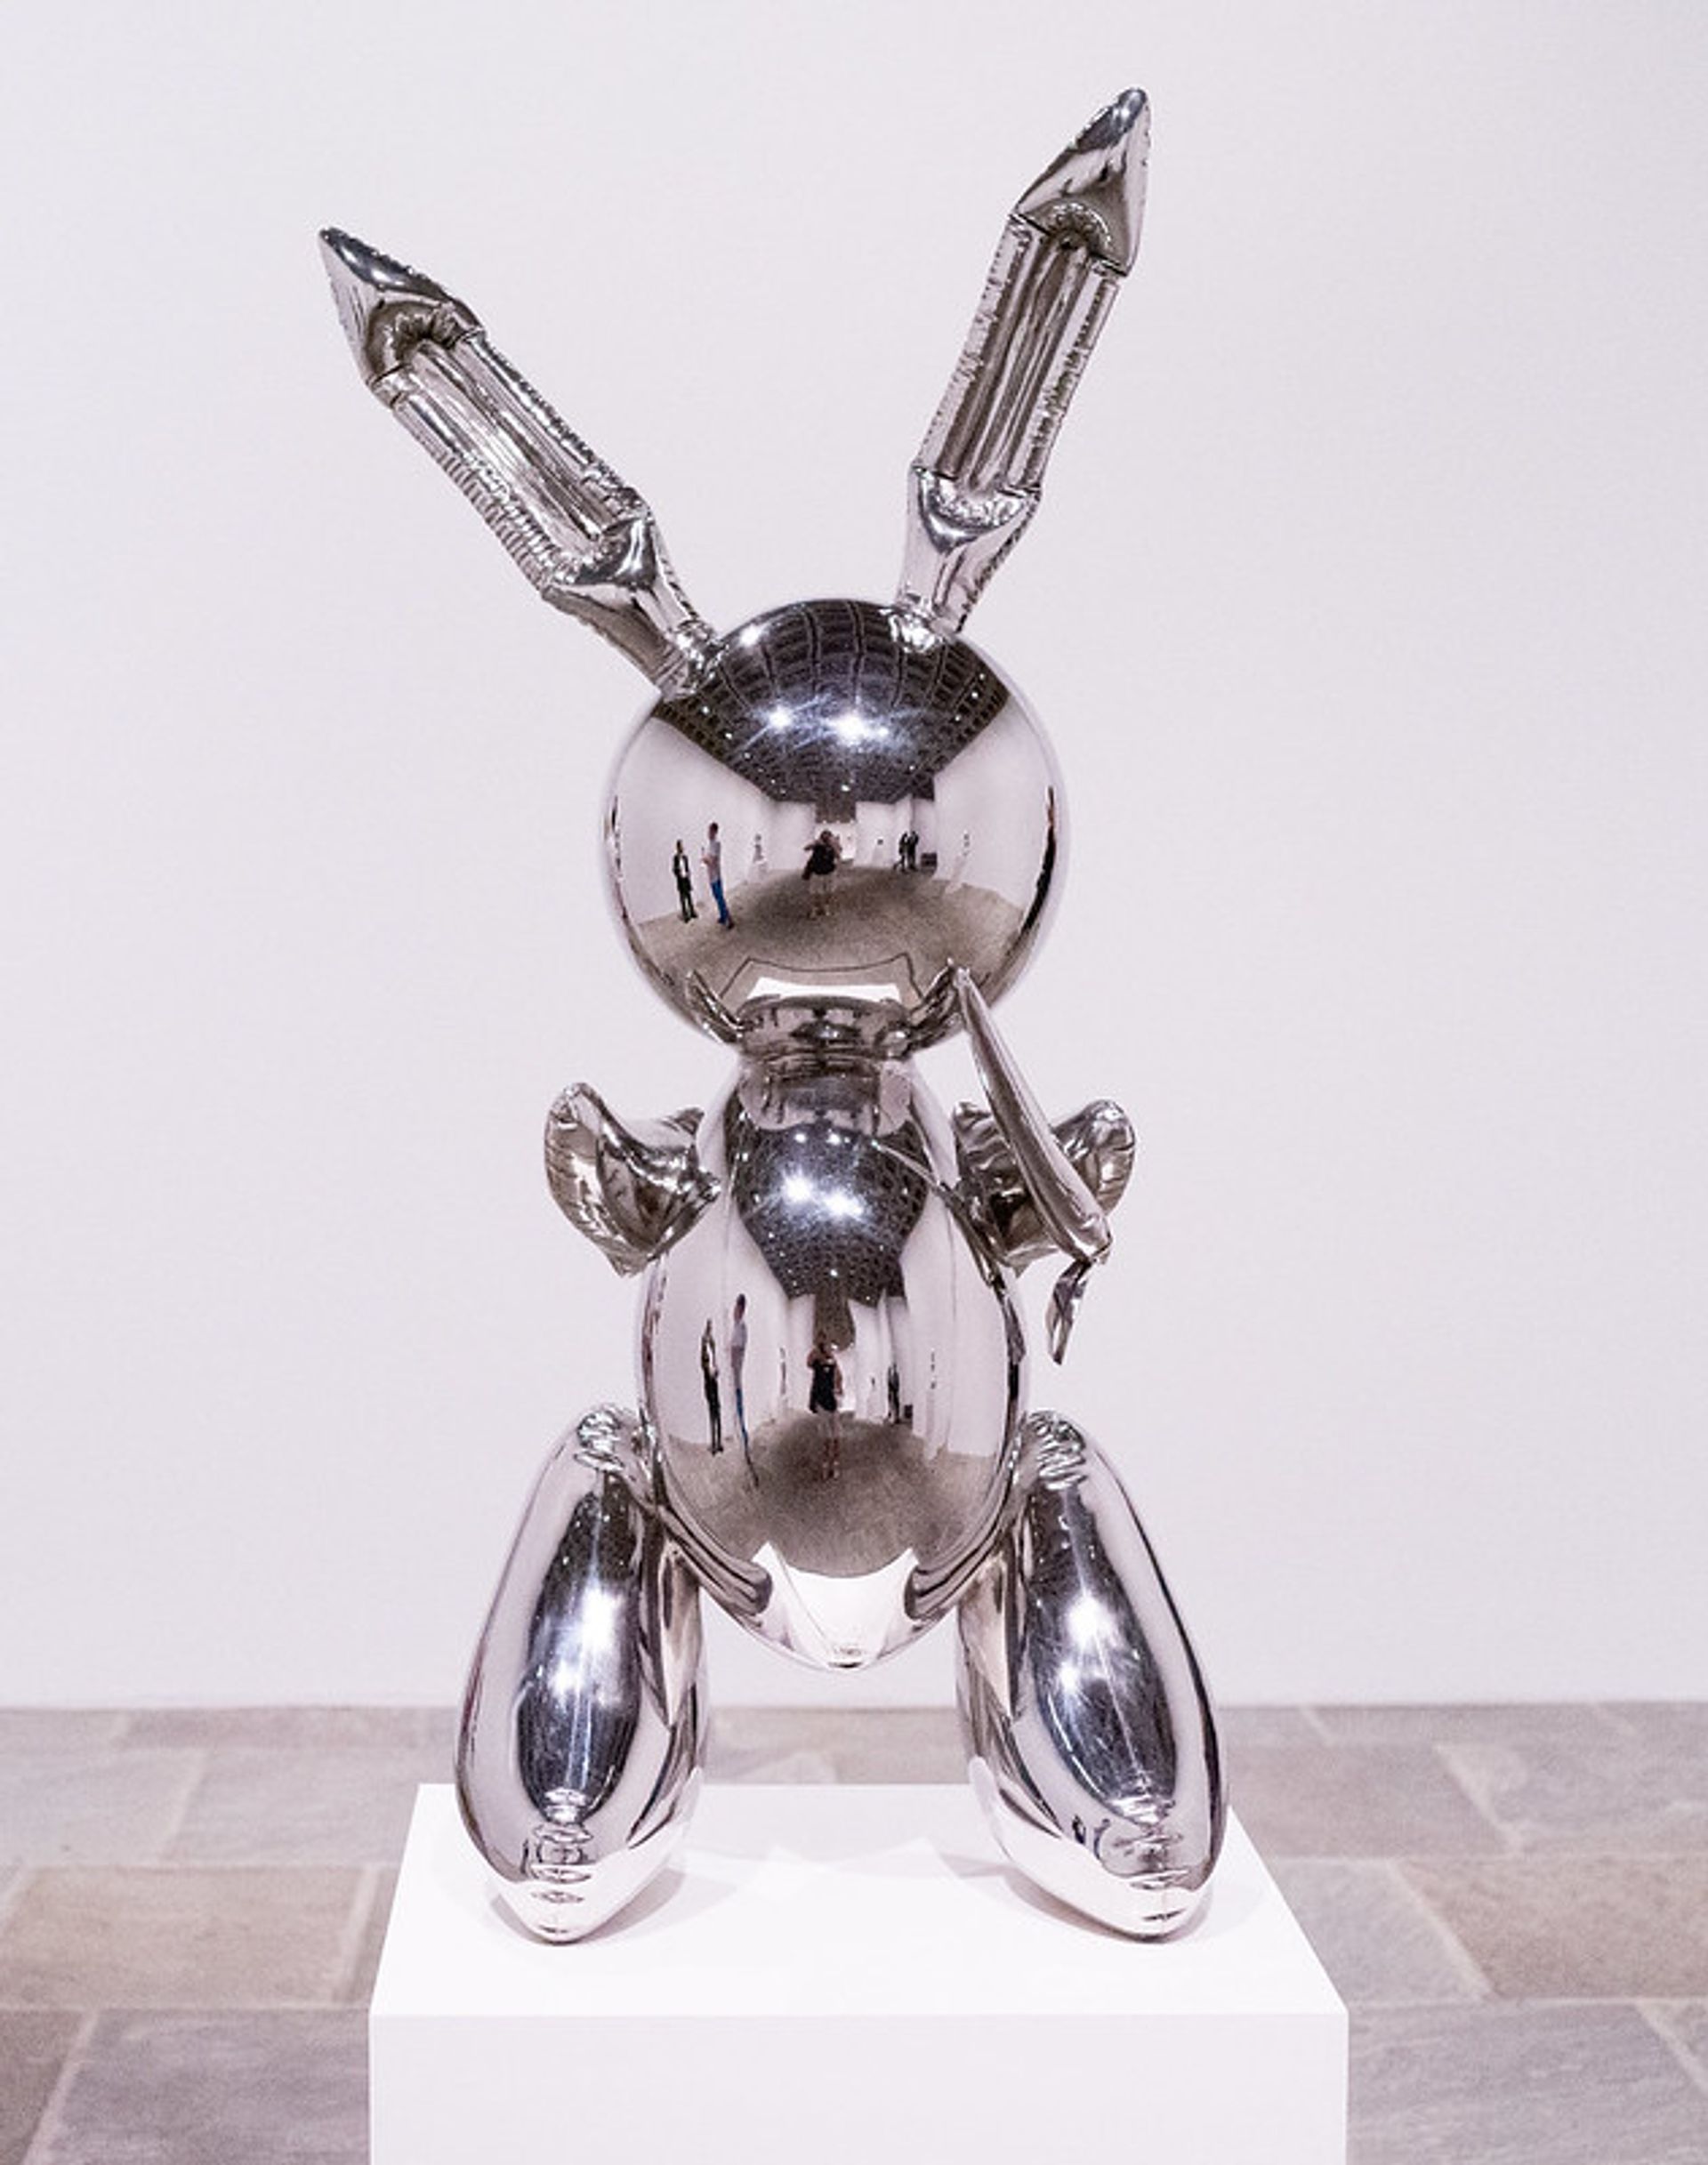 Jeff Koons, Rabbit, 1986, acier inoxydable. © Jeff Koons. Photo Victoria Pickering